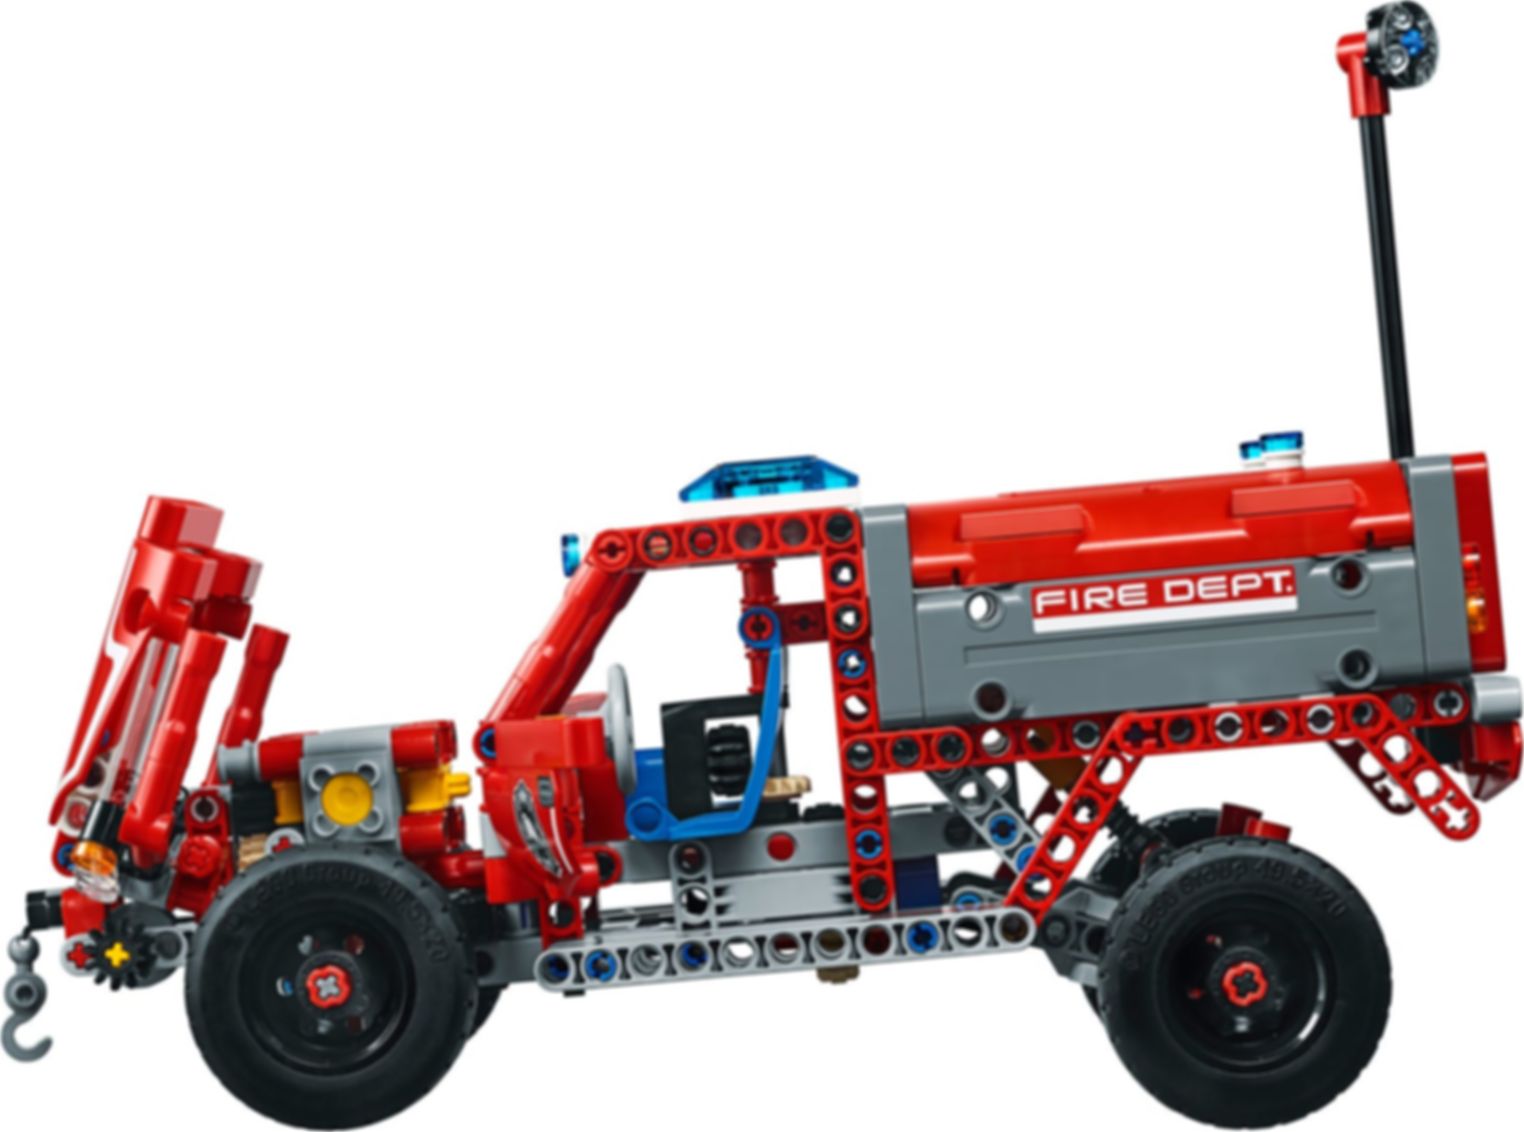 LEGO® Technic First Responder komponenten